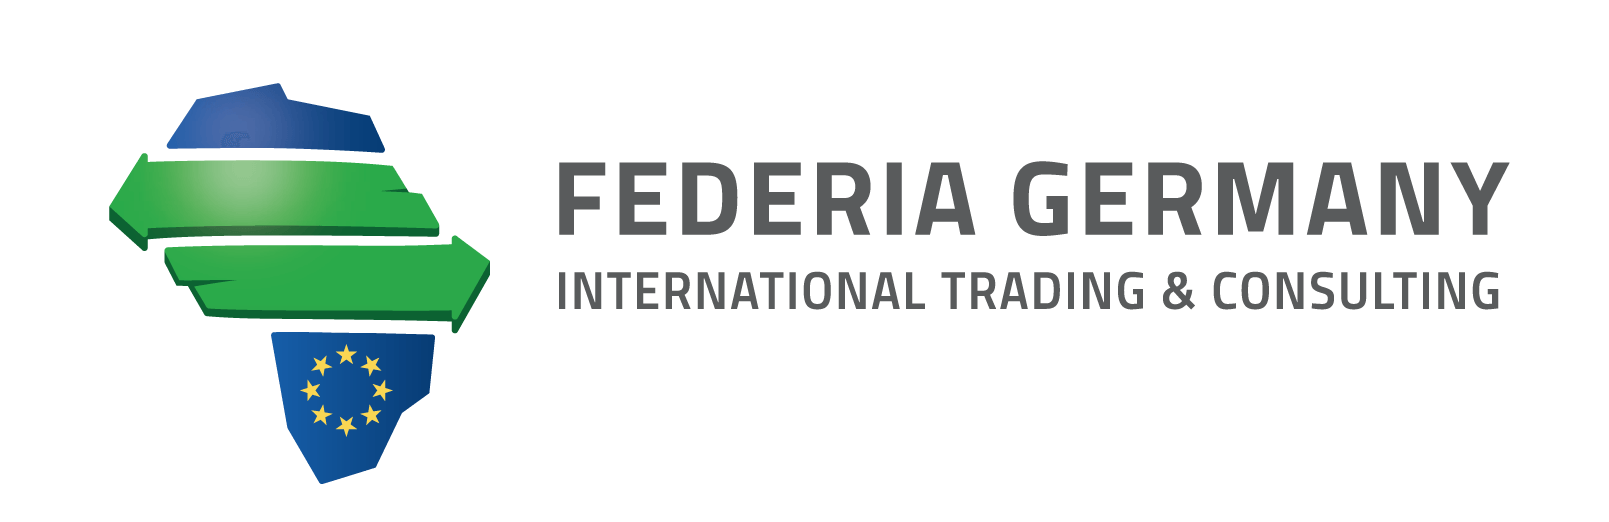 Federia Germany Logo